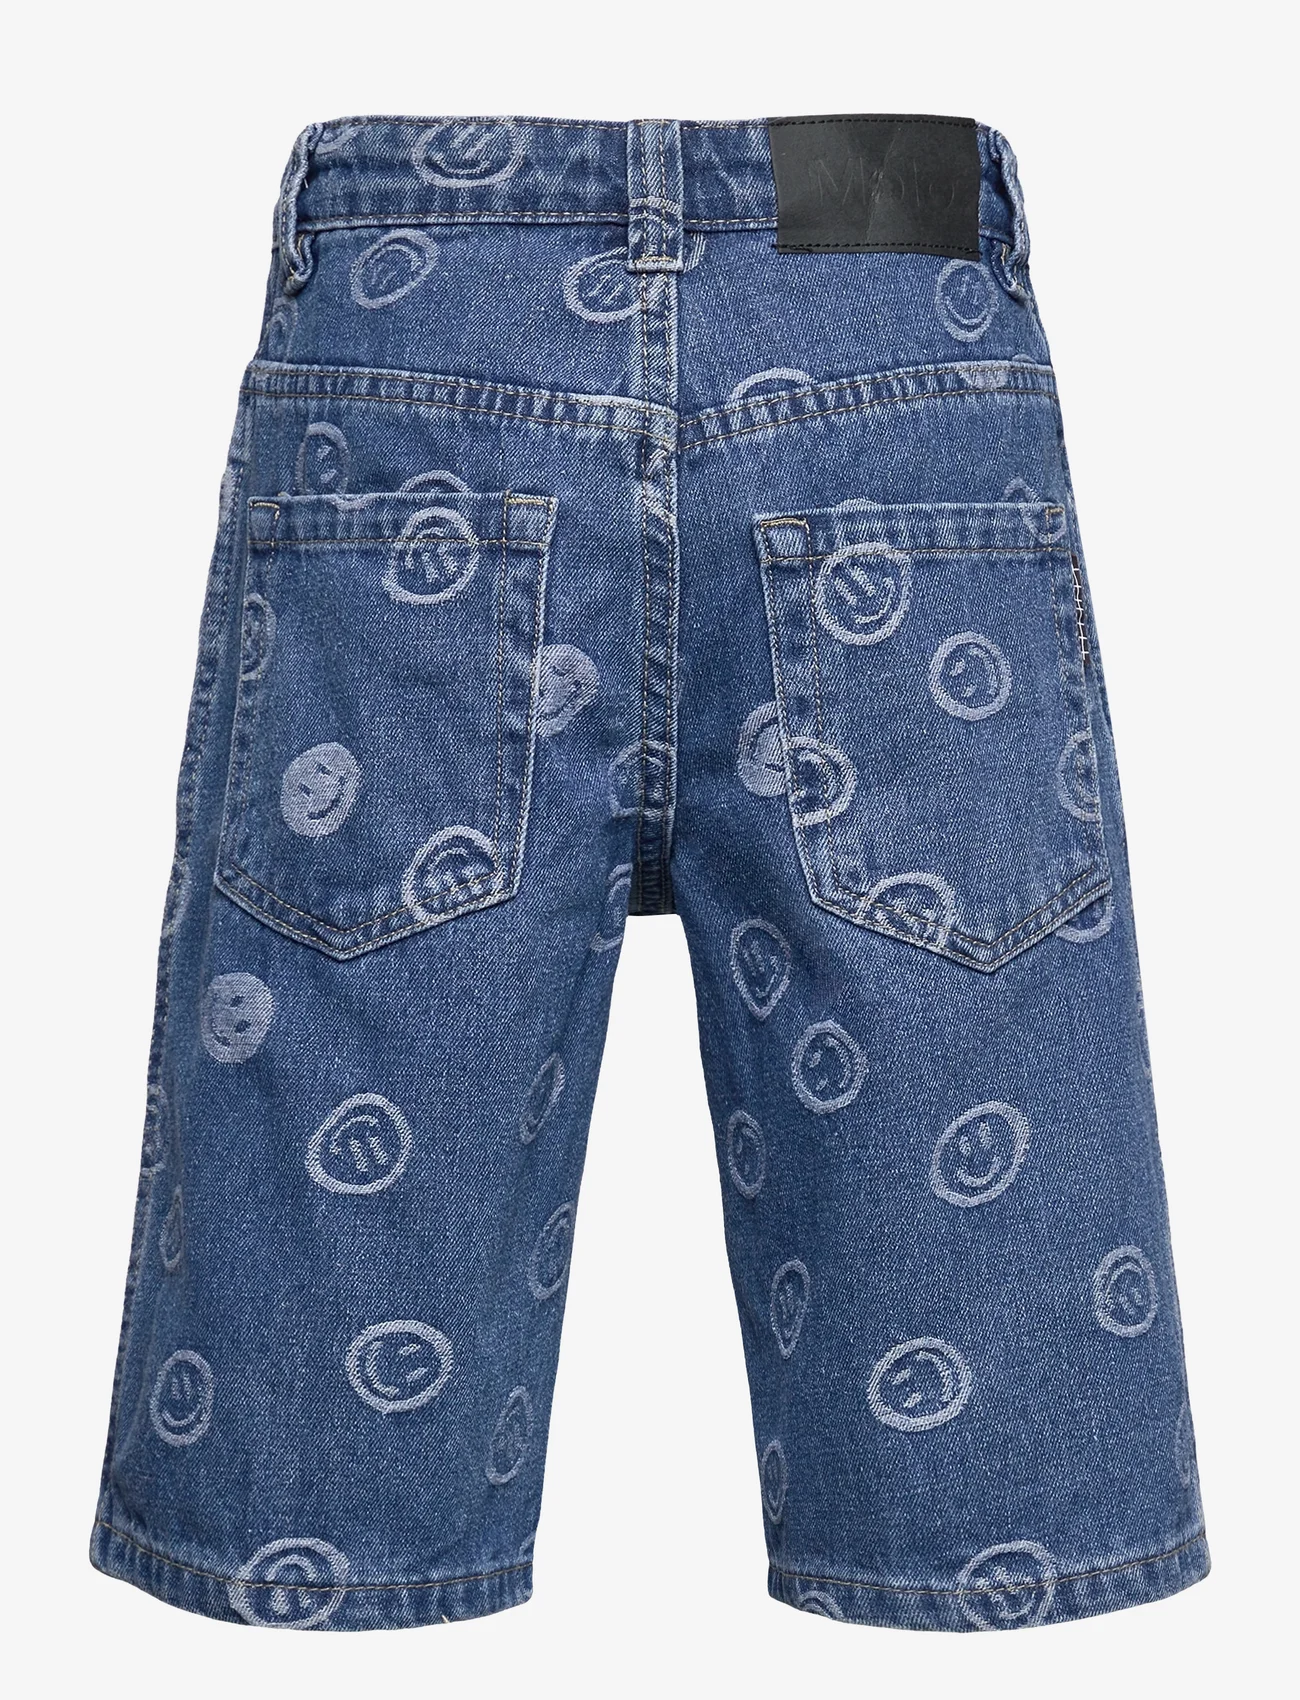 Molo - Art - jeansshorts - blue happiness - 1